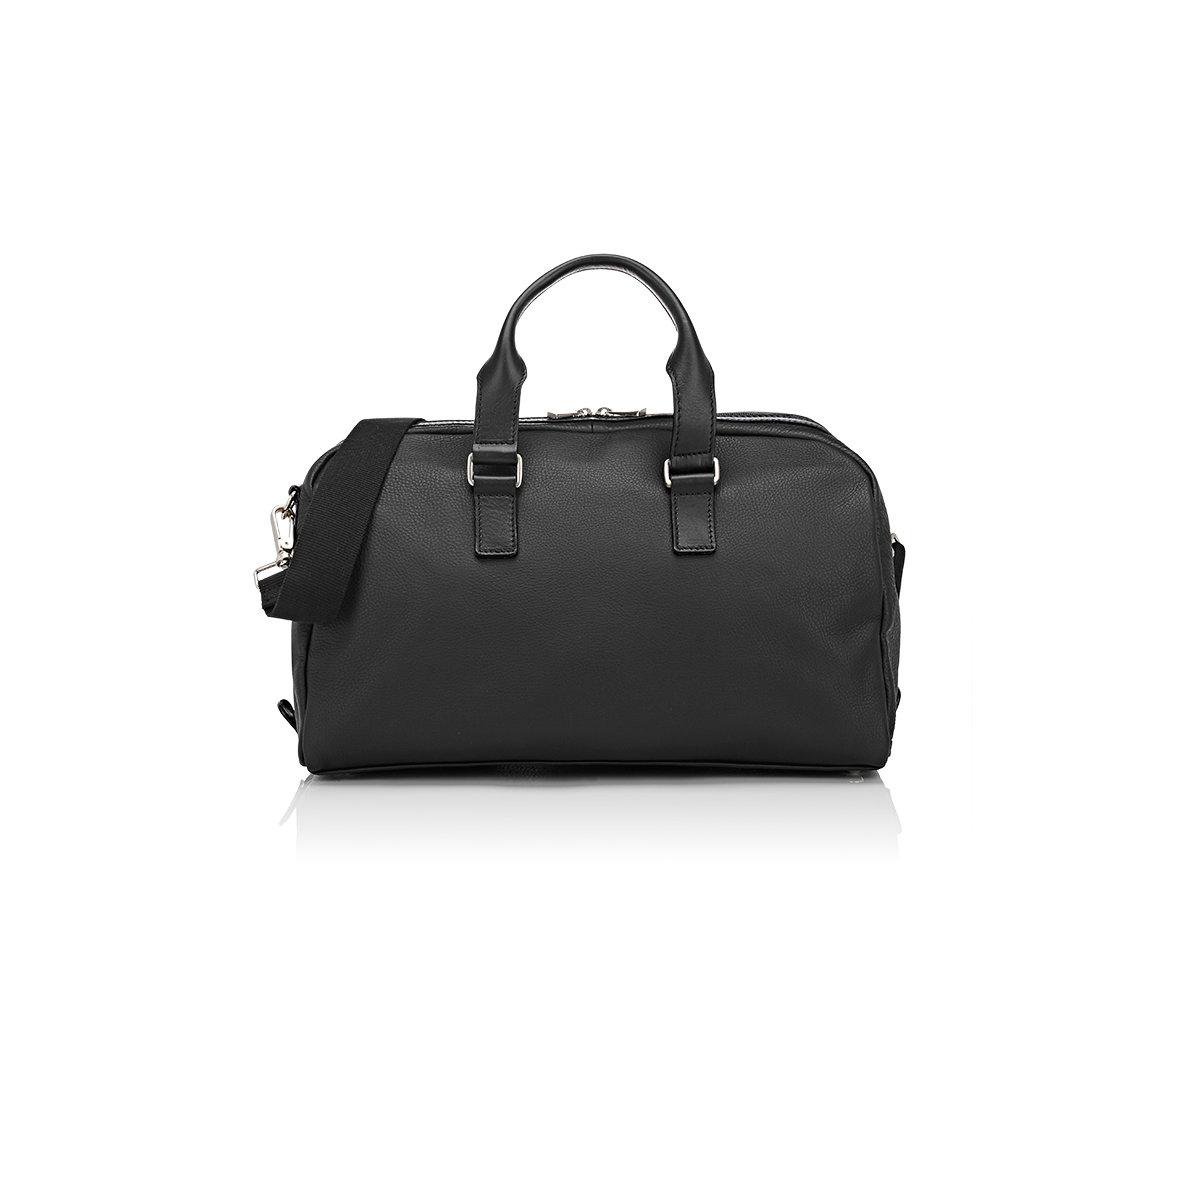 Lyst - Barneys New York Small Duffel Bag in Black for Men